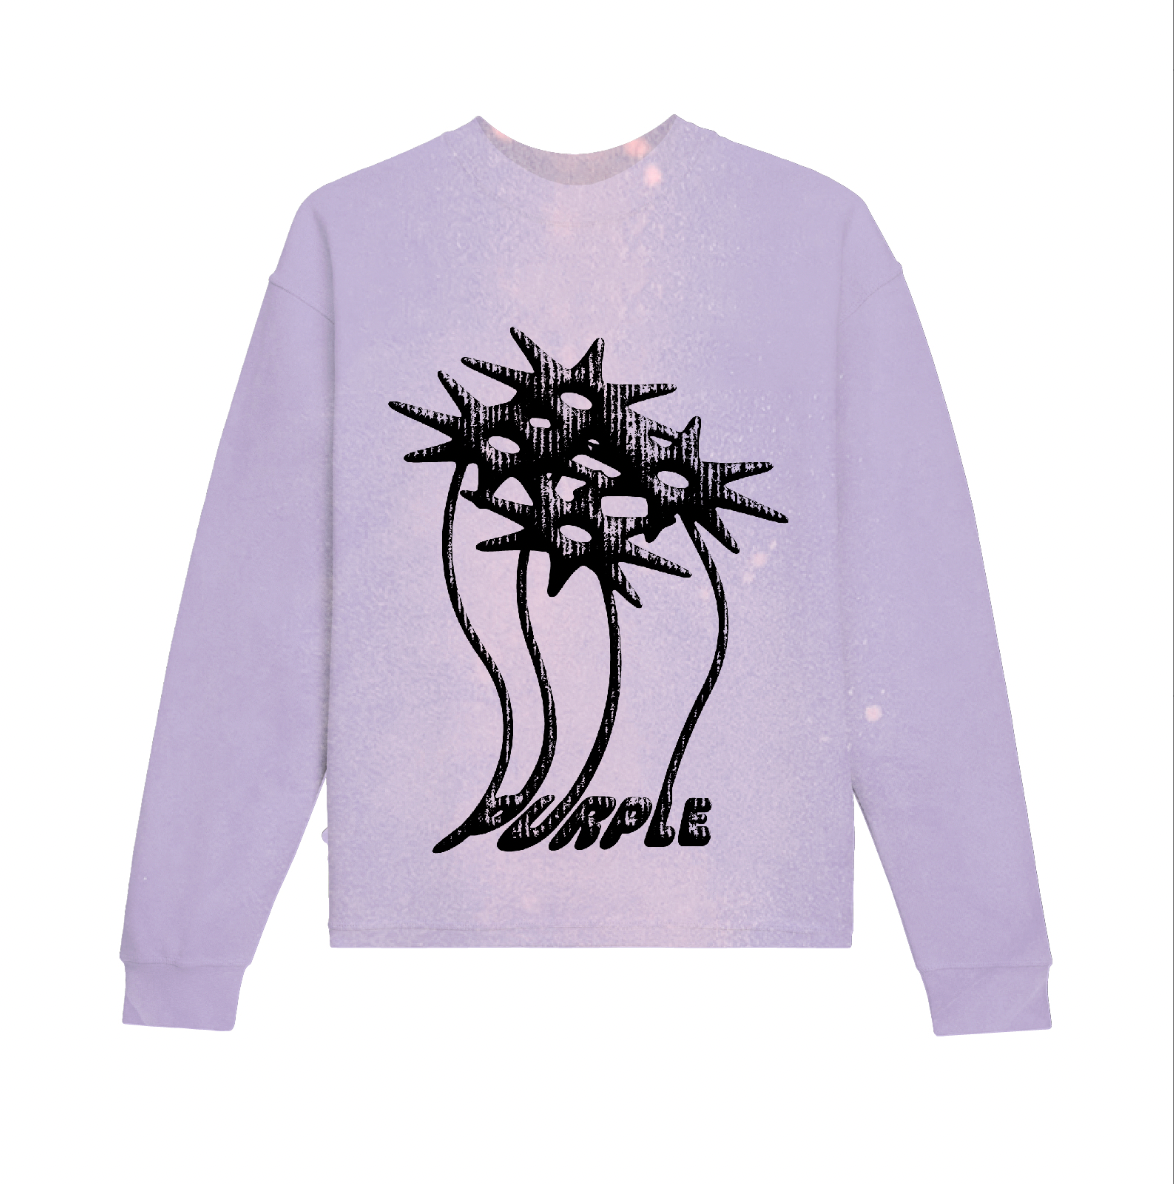 Purple Brand Heavy Jersey Ss Tee Hot Pink/Black Graphic – Upper Level 916